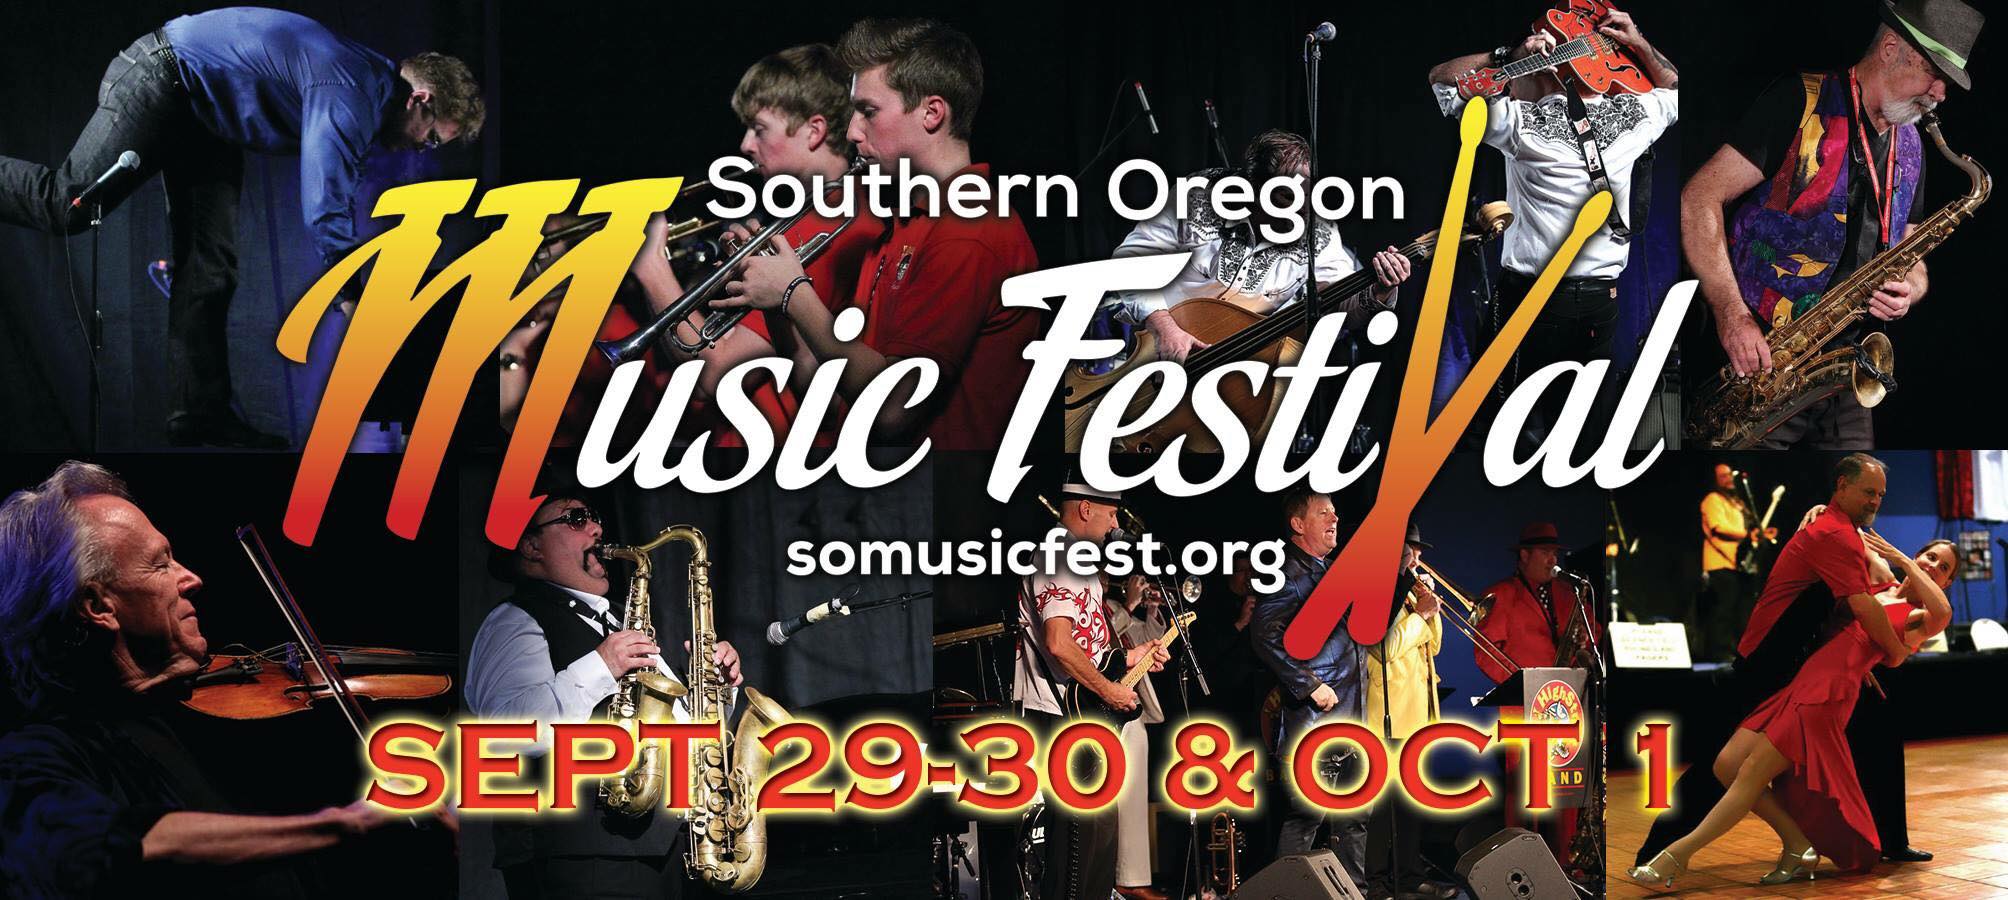 9/29/2017 Southern Oregon Music Festival (Medford, OR